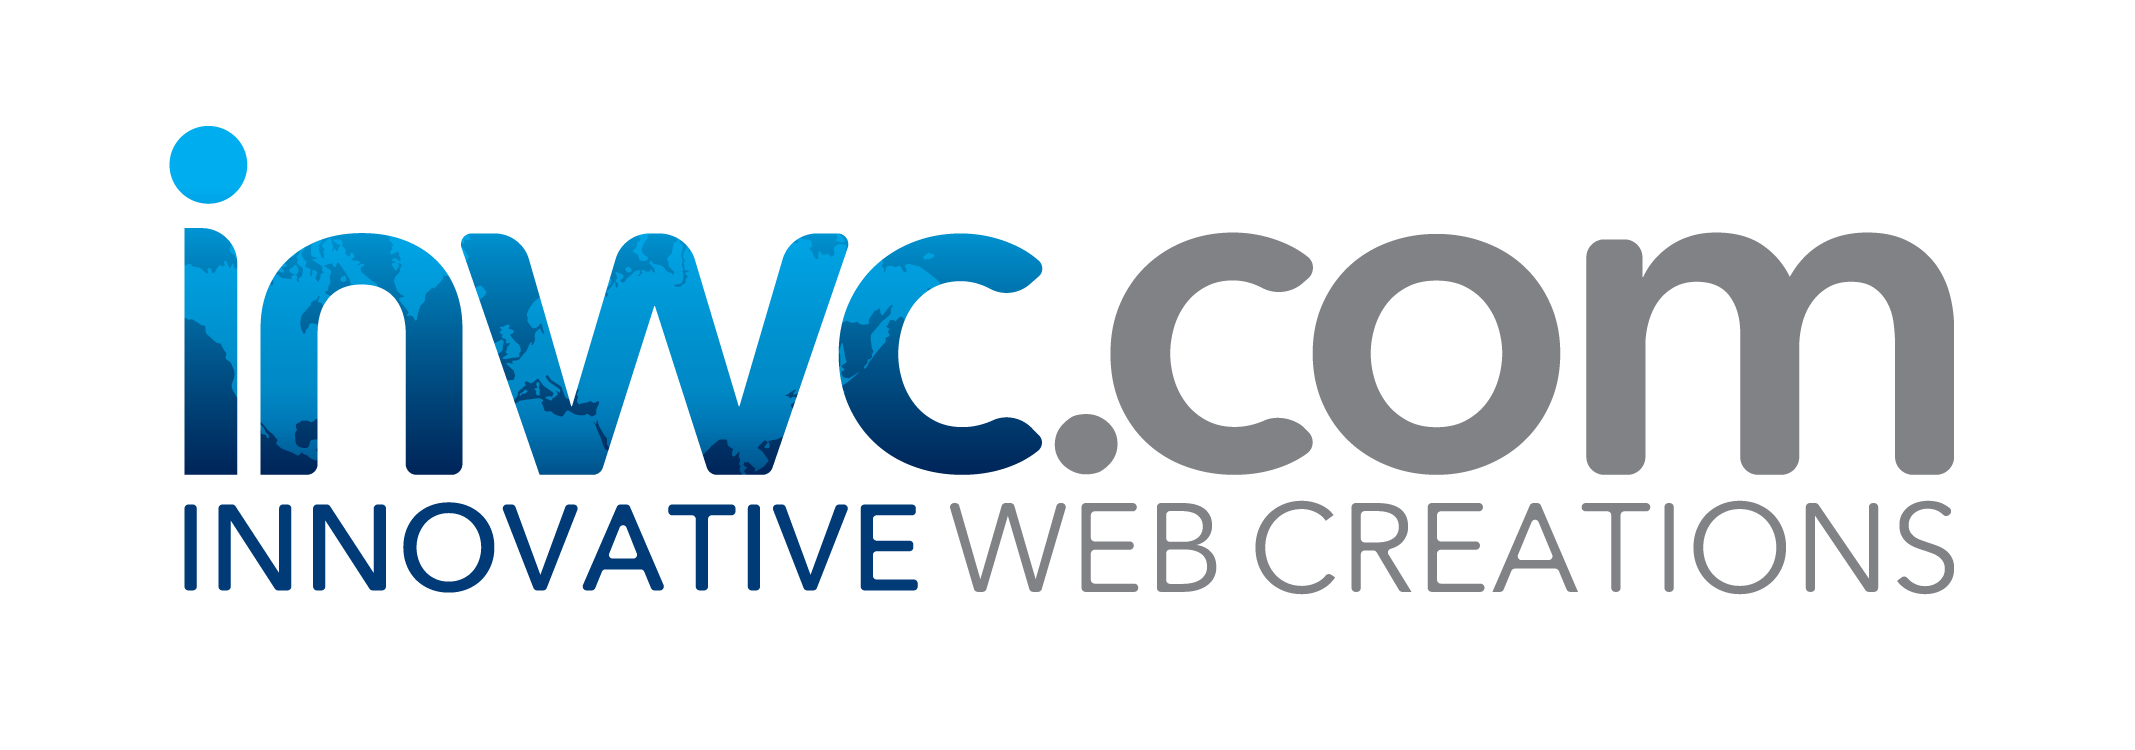 Innovative Web Creations